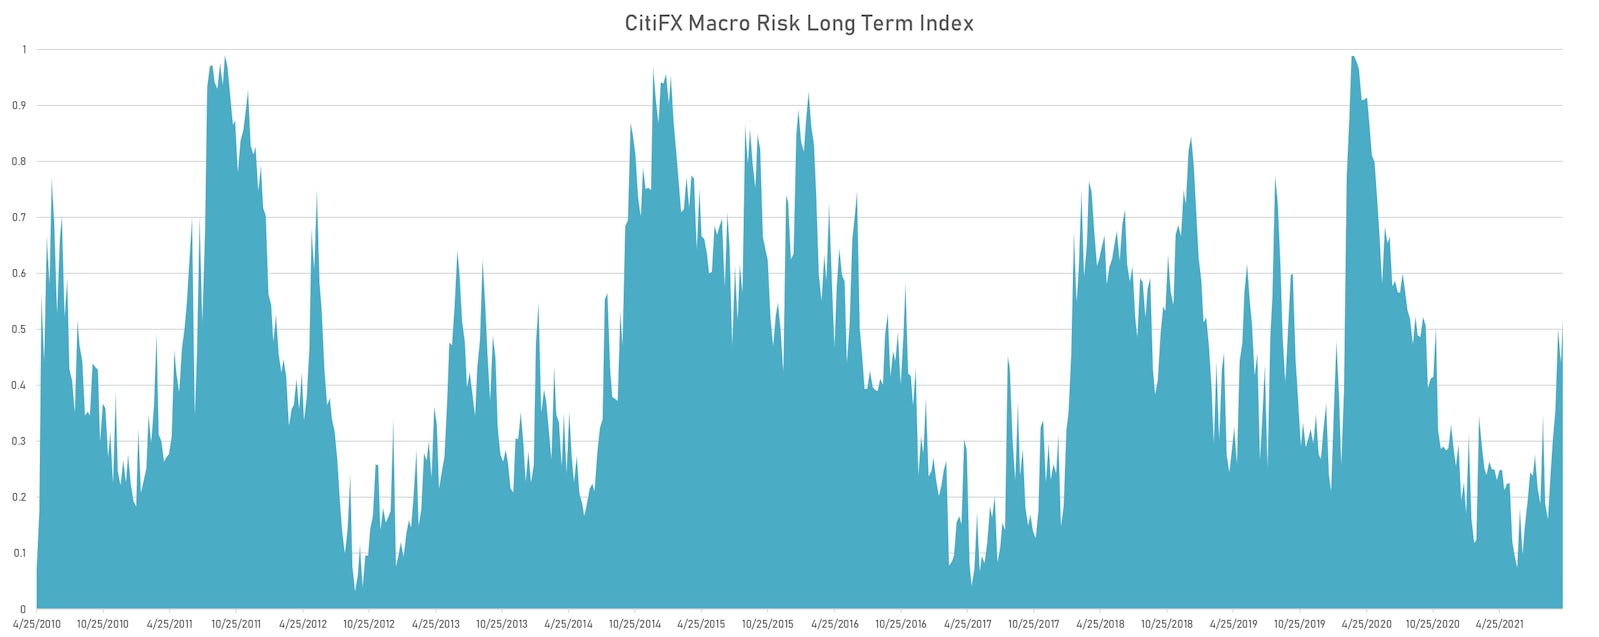 CitiFX Macro Risk Long Term Index | Sources: ϕpost, Refinitiv data